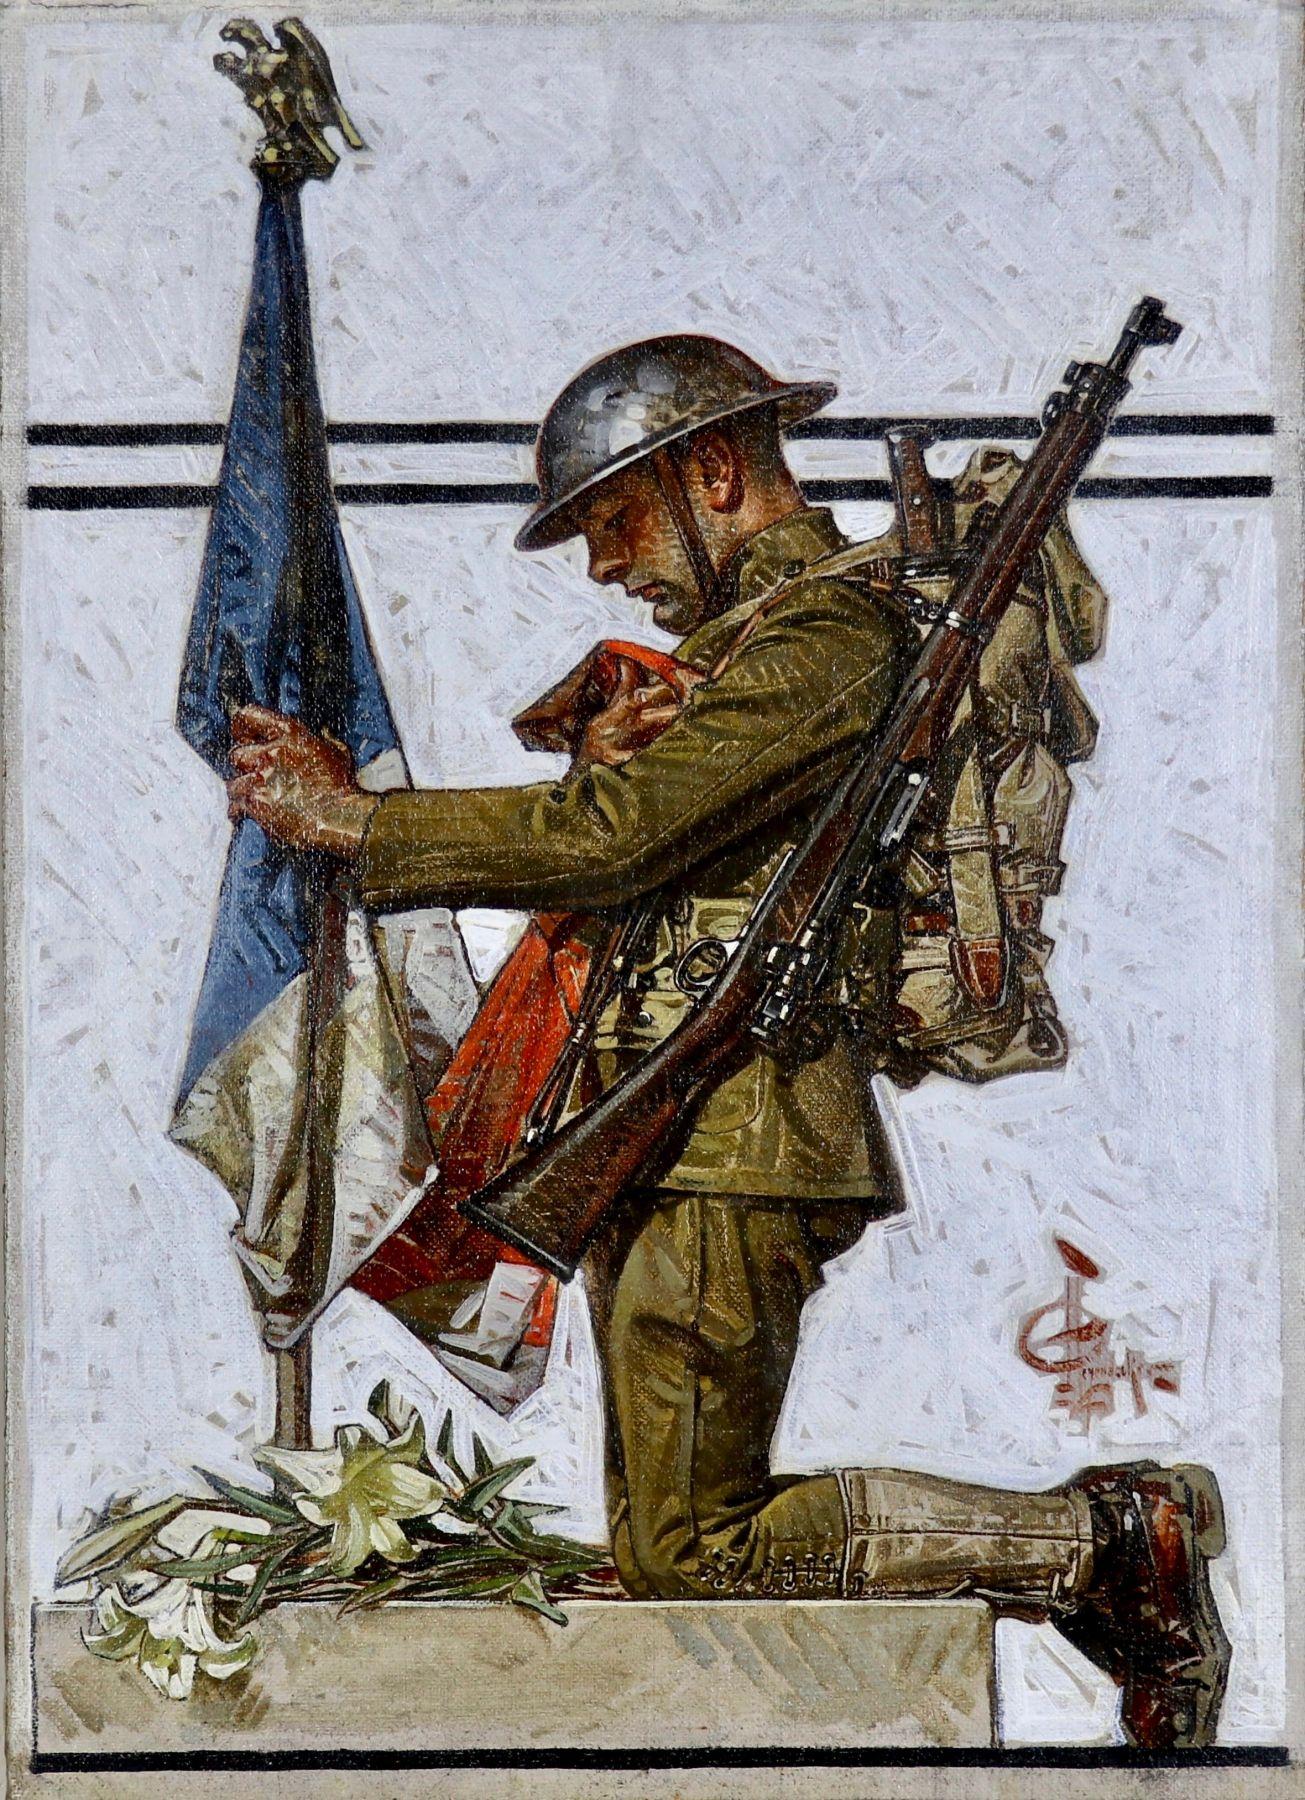 Joseph Christian Leyendecker Figurative Painting - Soldier Kneeling at French Memorial